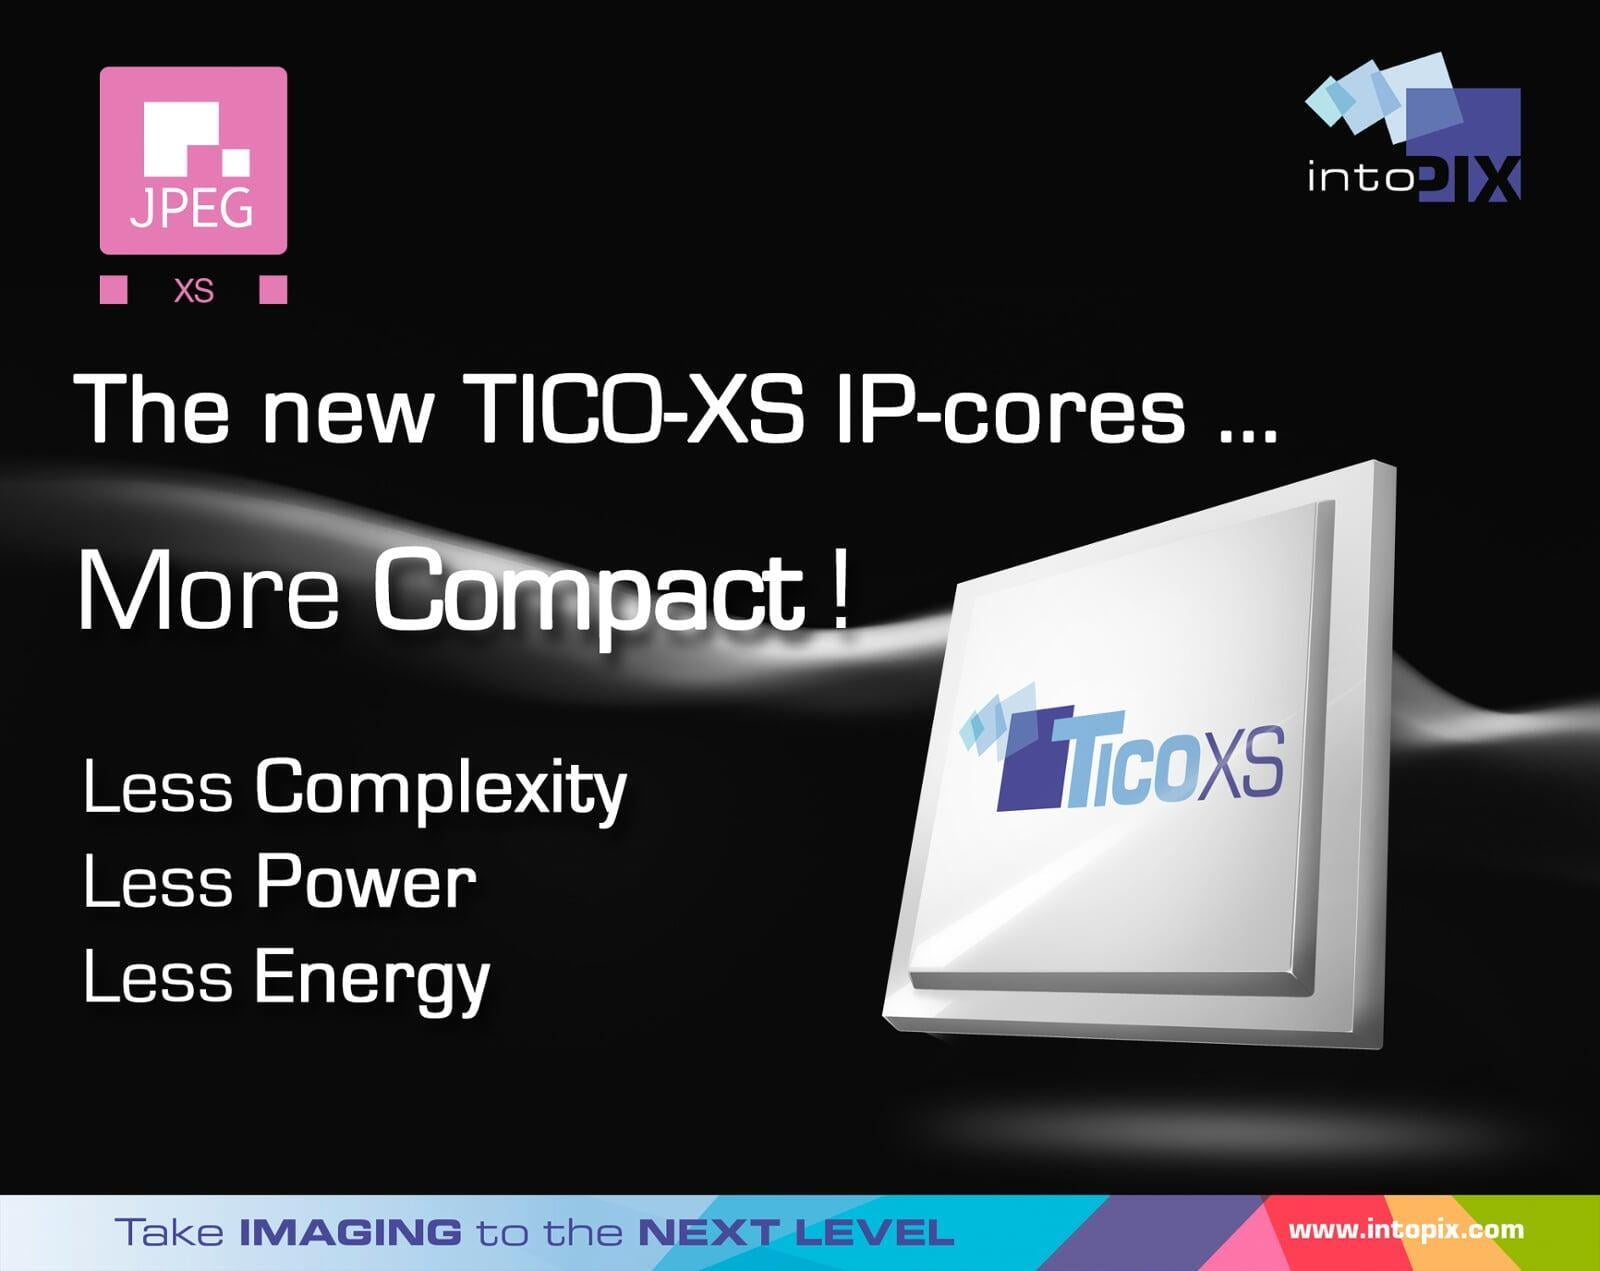 intoPIX, 새로운 JPEG XS 컴팩트 인코더 및 디코더 제품군 출시